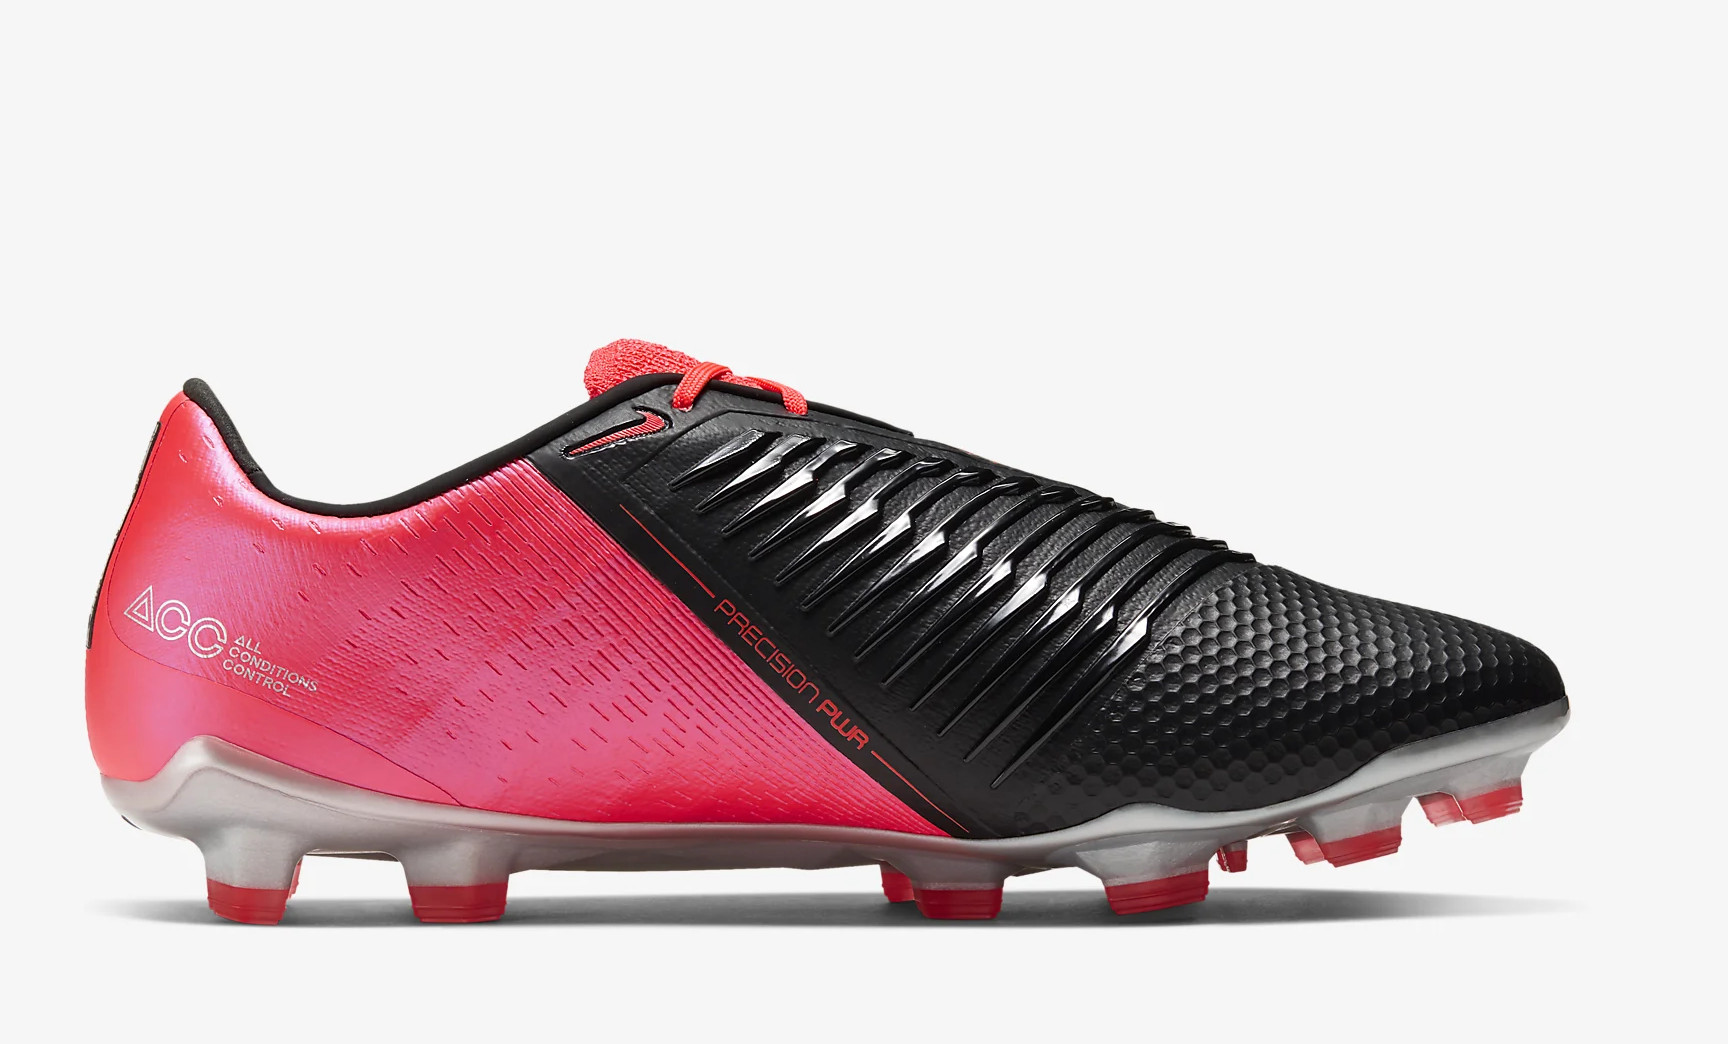 Roze Nike Phantom Venom voetbalschoenen Lab pack - Voetbal-schoenen .eu